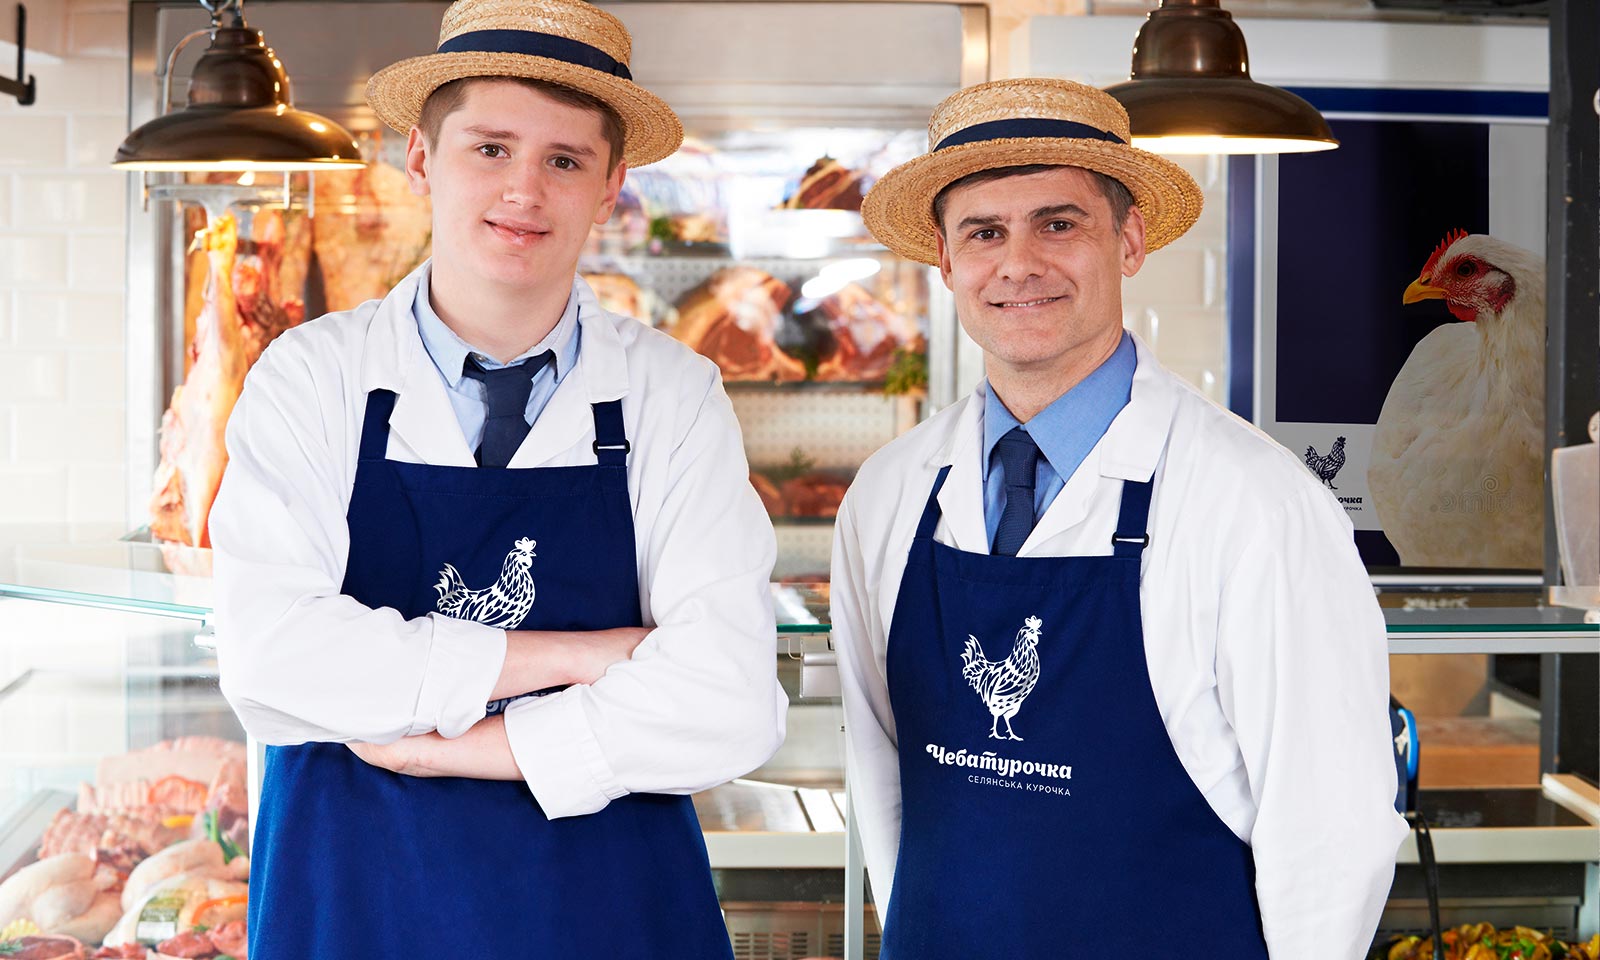 Wishnia Rebranding for Chebaturochka One of Poultry Meat Producers in the Ukraine